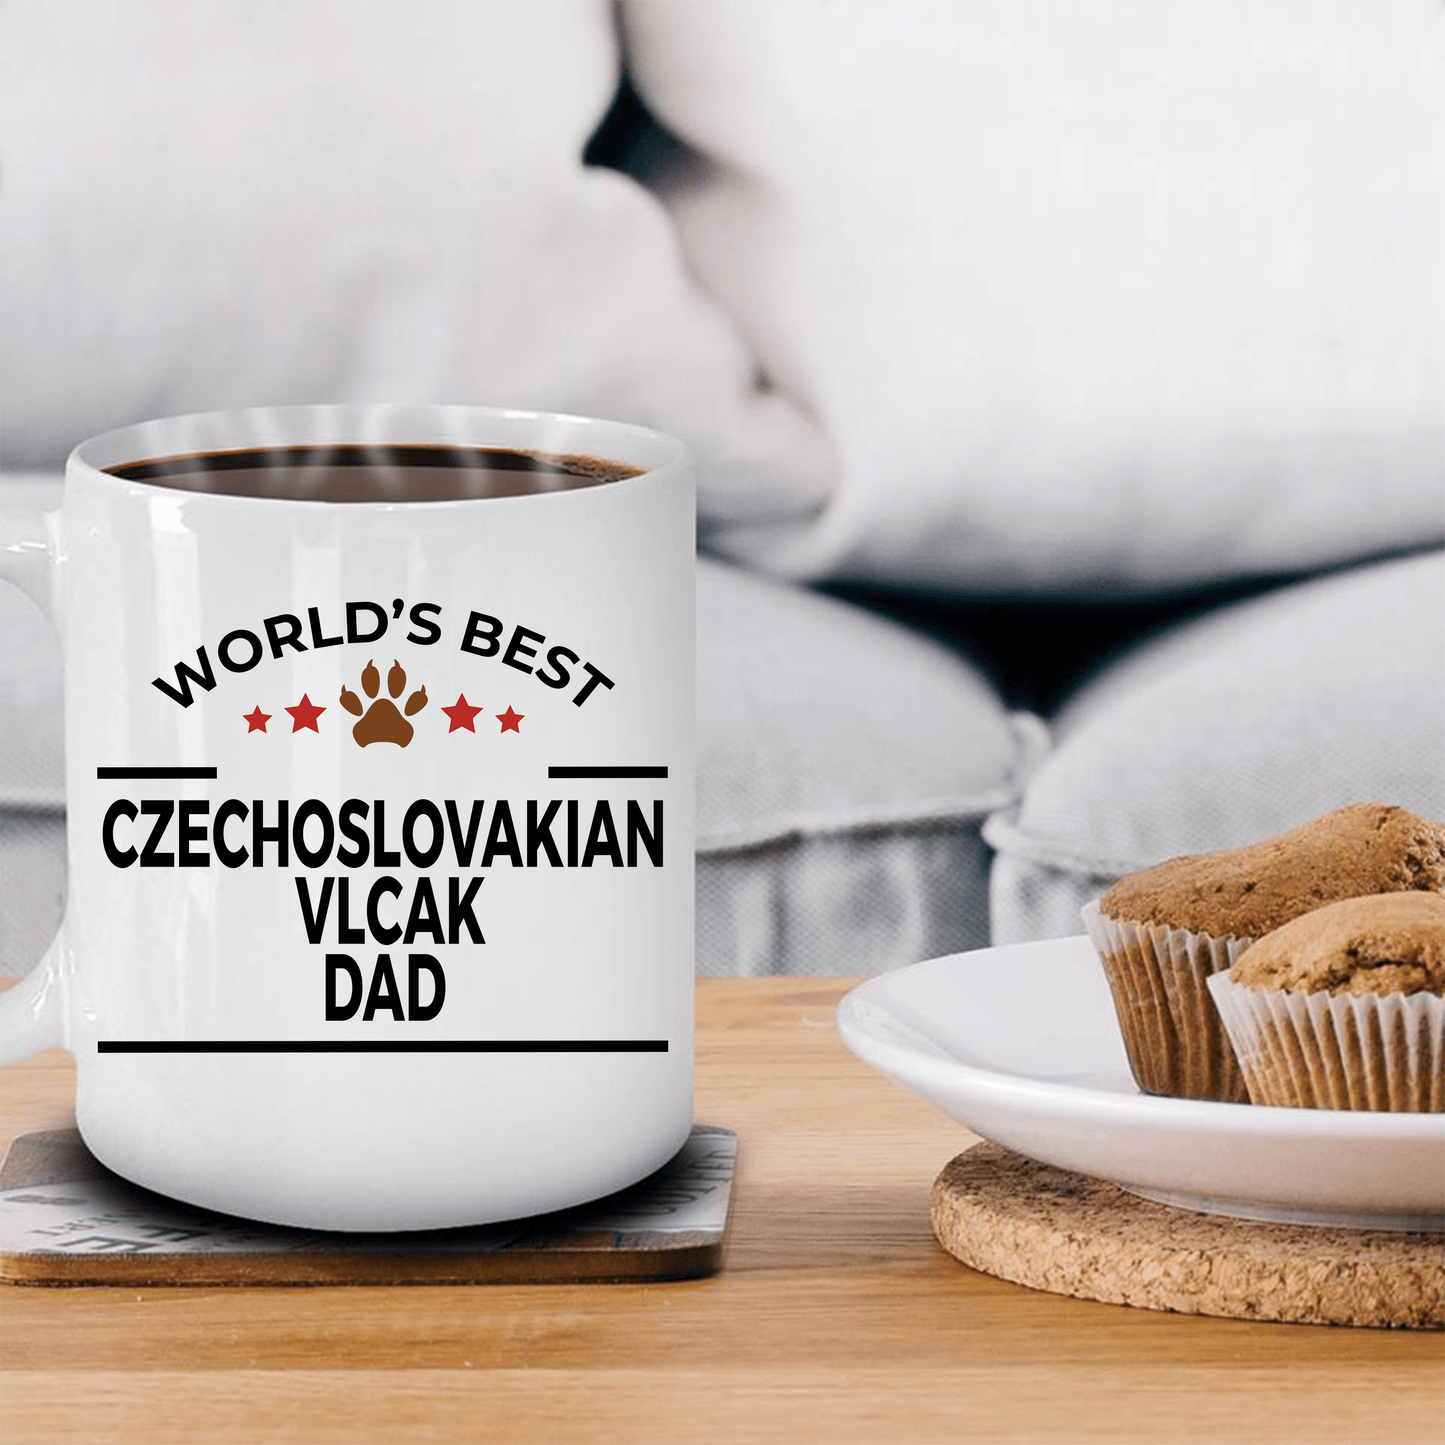 Czechoslovakian Vlcak Dog Lover Gift World's Best Dad Birthday Father's Day White Ceramic Coffee Mug